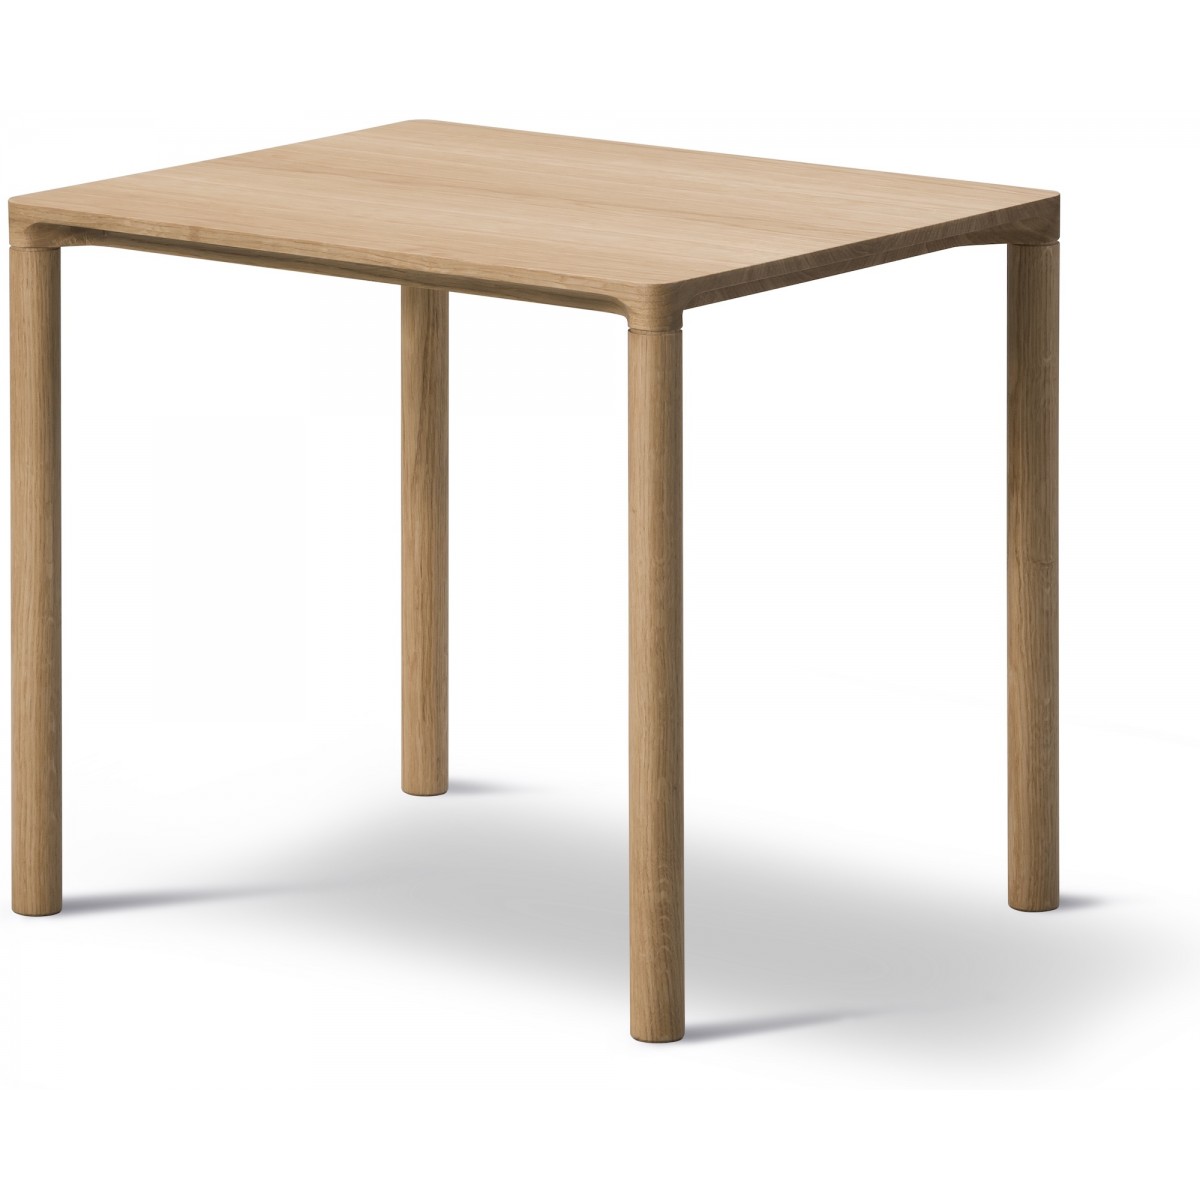 oiled oak – 46.5 x 39 cm – Piloti 6705 coffee table